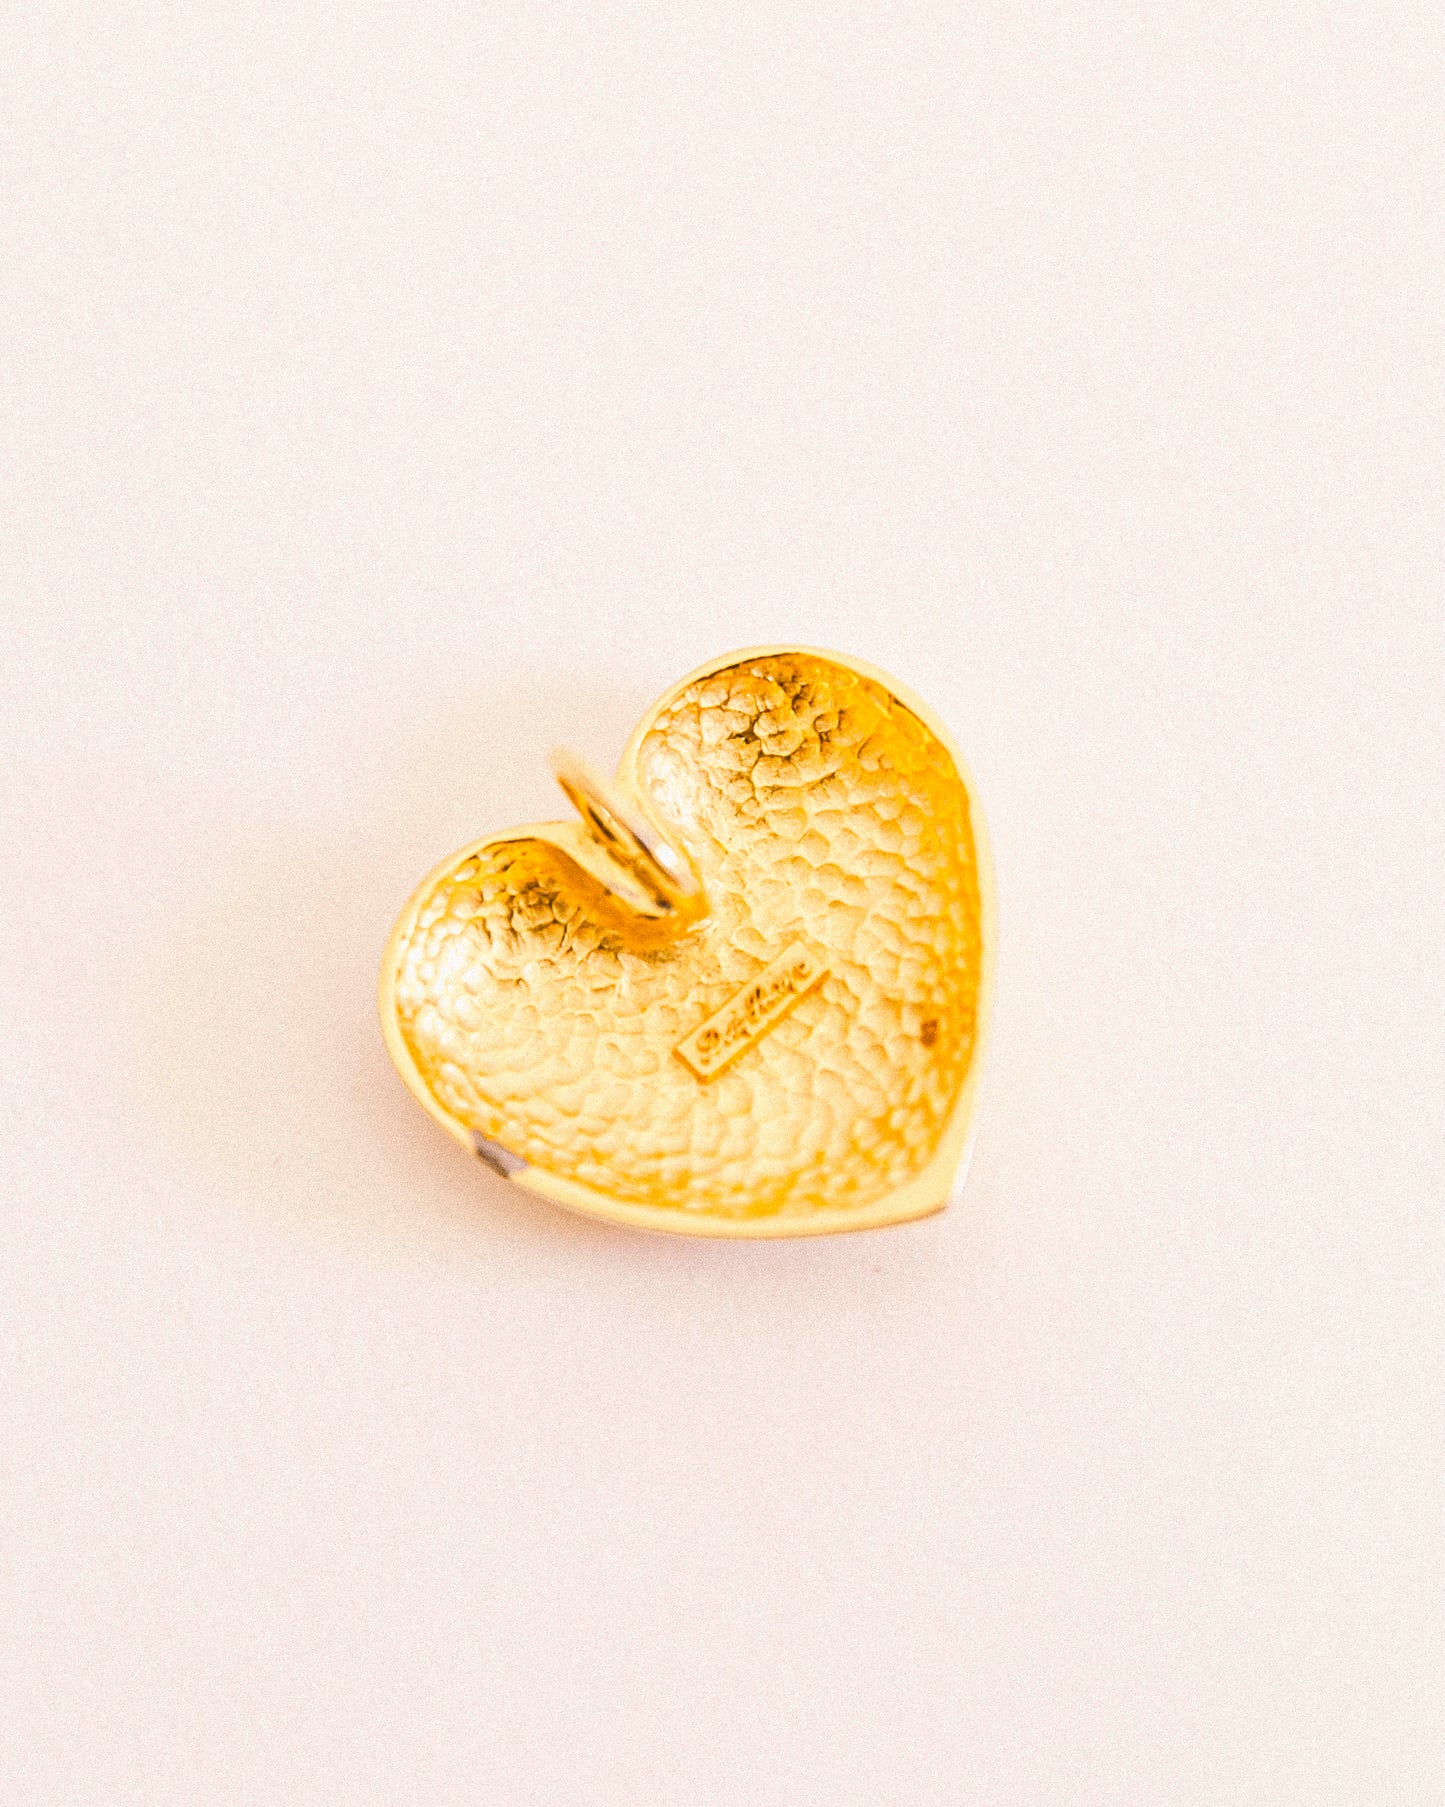 Gold Heart Pendant